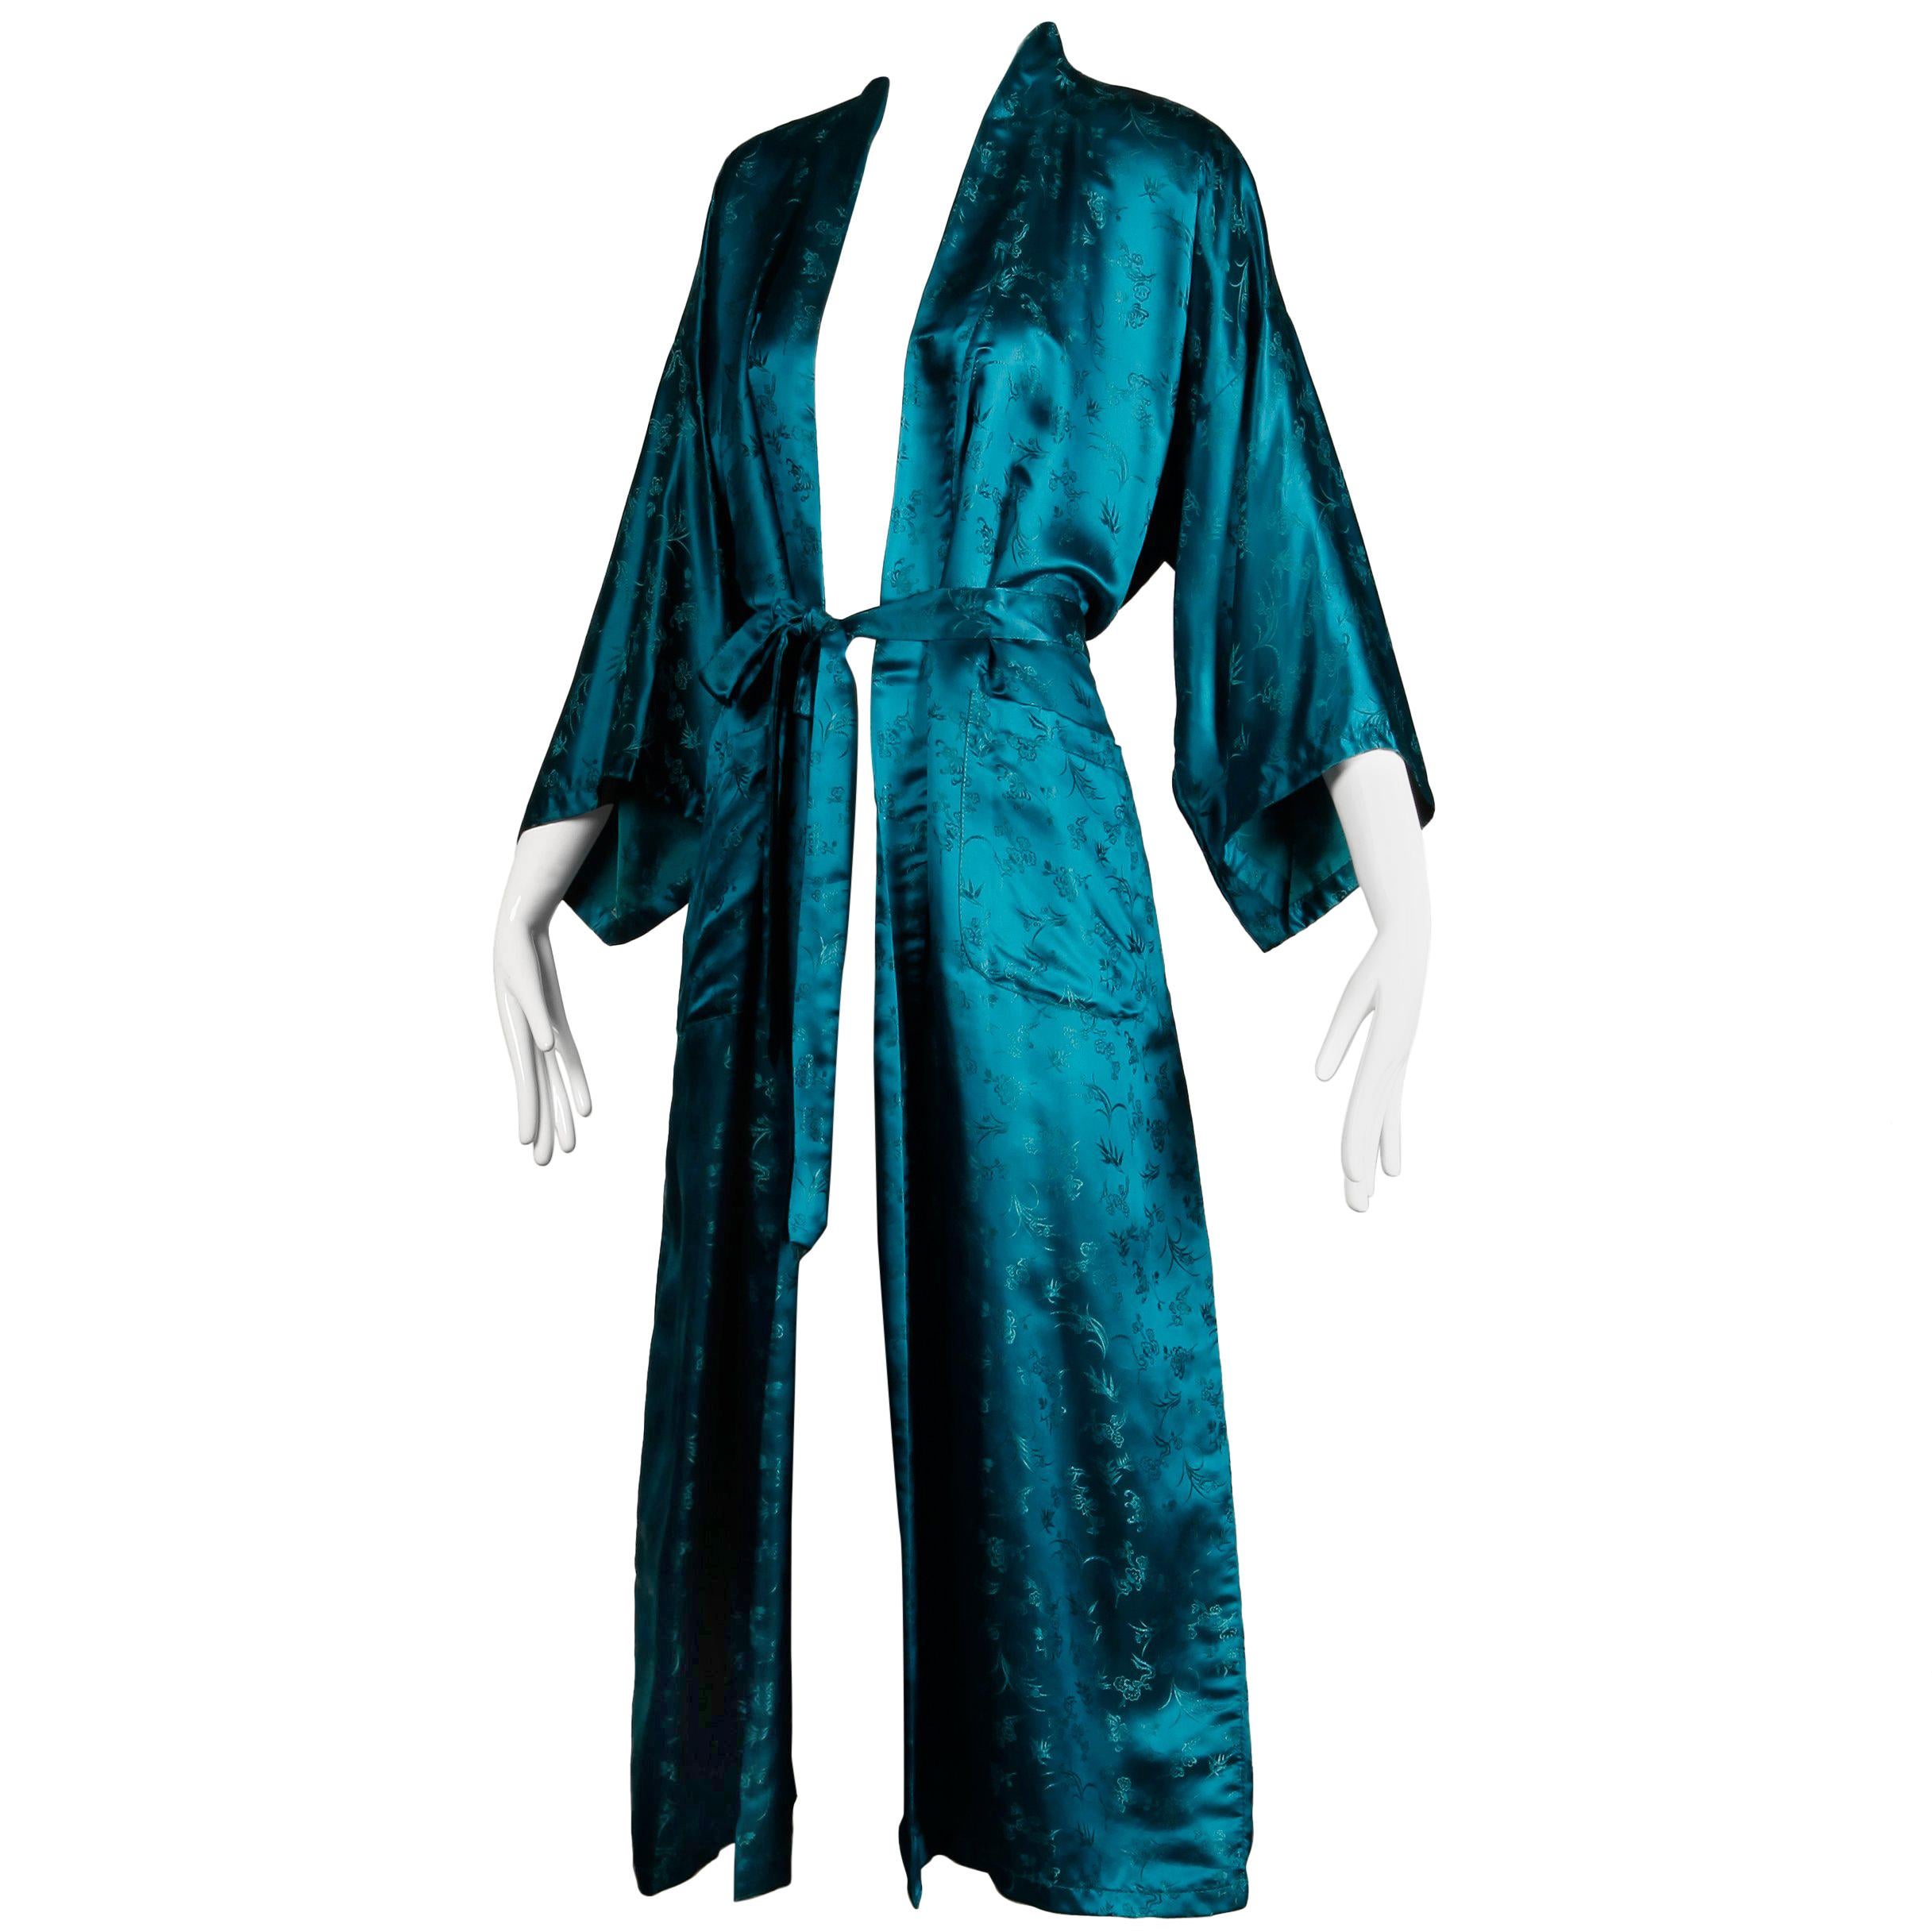 Stunning 20th C. Chinese Blue-Green Silk Satin Robe with Sash